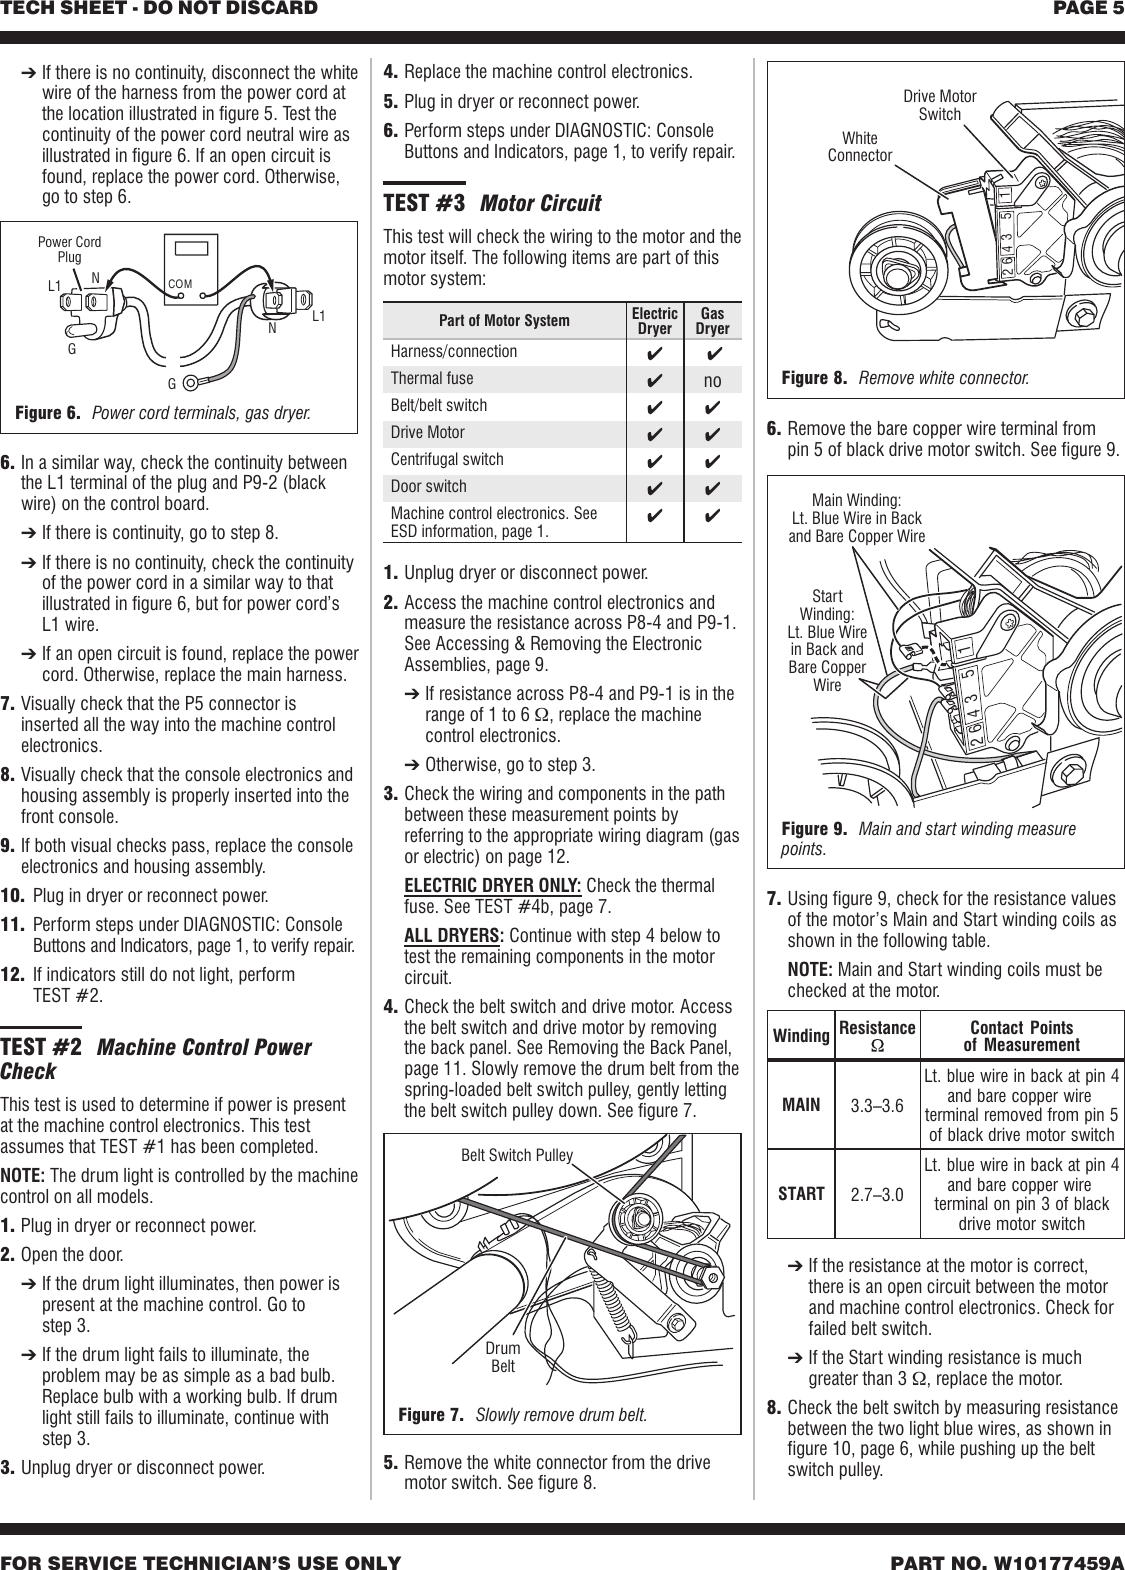 Page 5 of 12 - ZB80281_W10177459A.vp  W10177459A - Whirlpool Duet Sport Dryer Tech Sheet